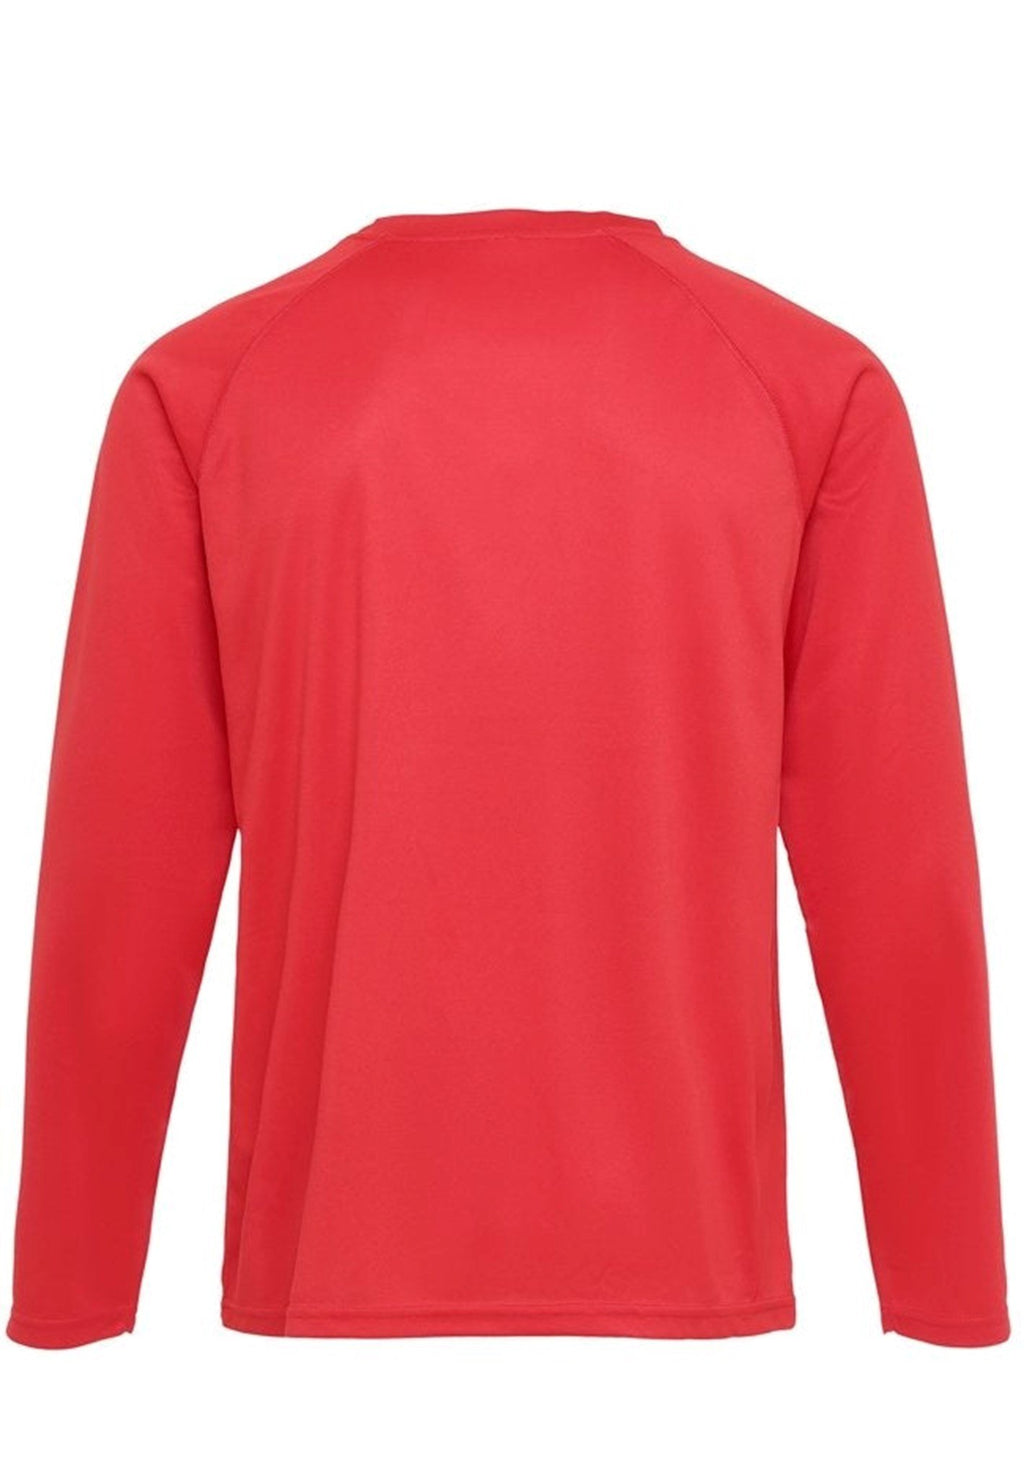 Langærmet Trænings T-shirt - Rød